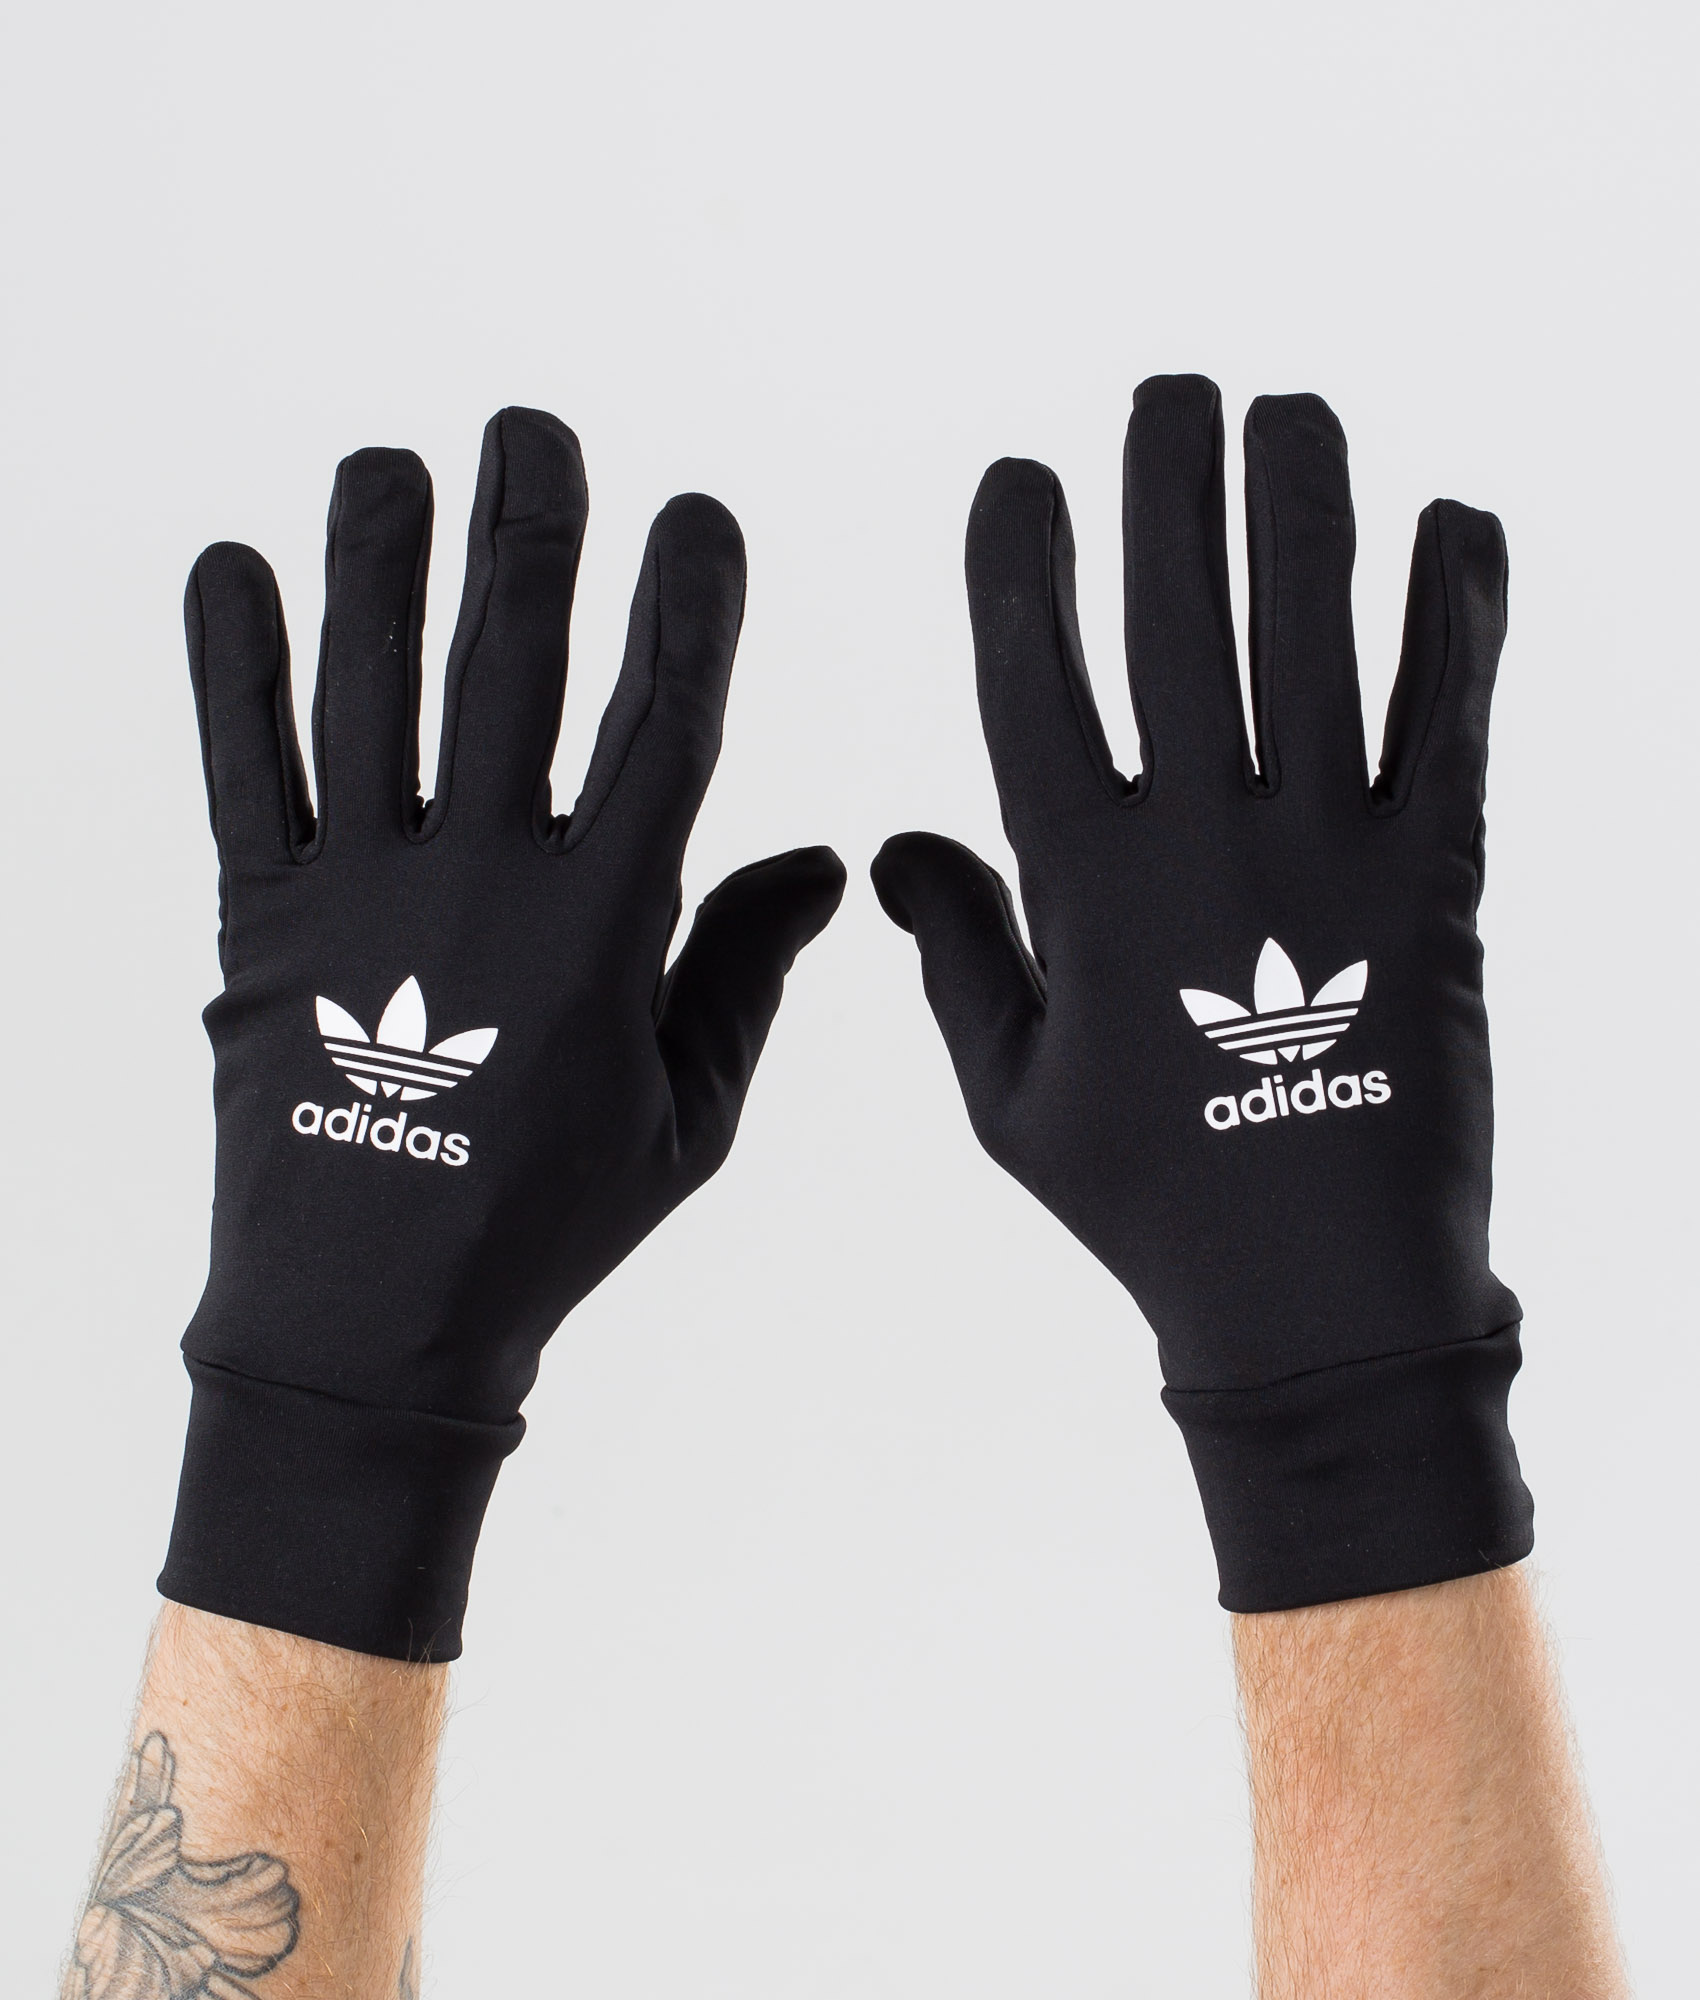 adidas gloves